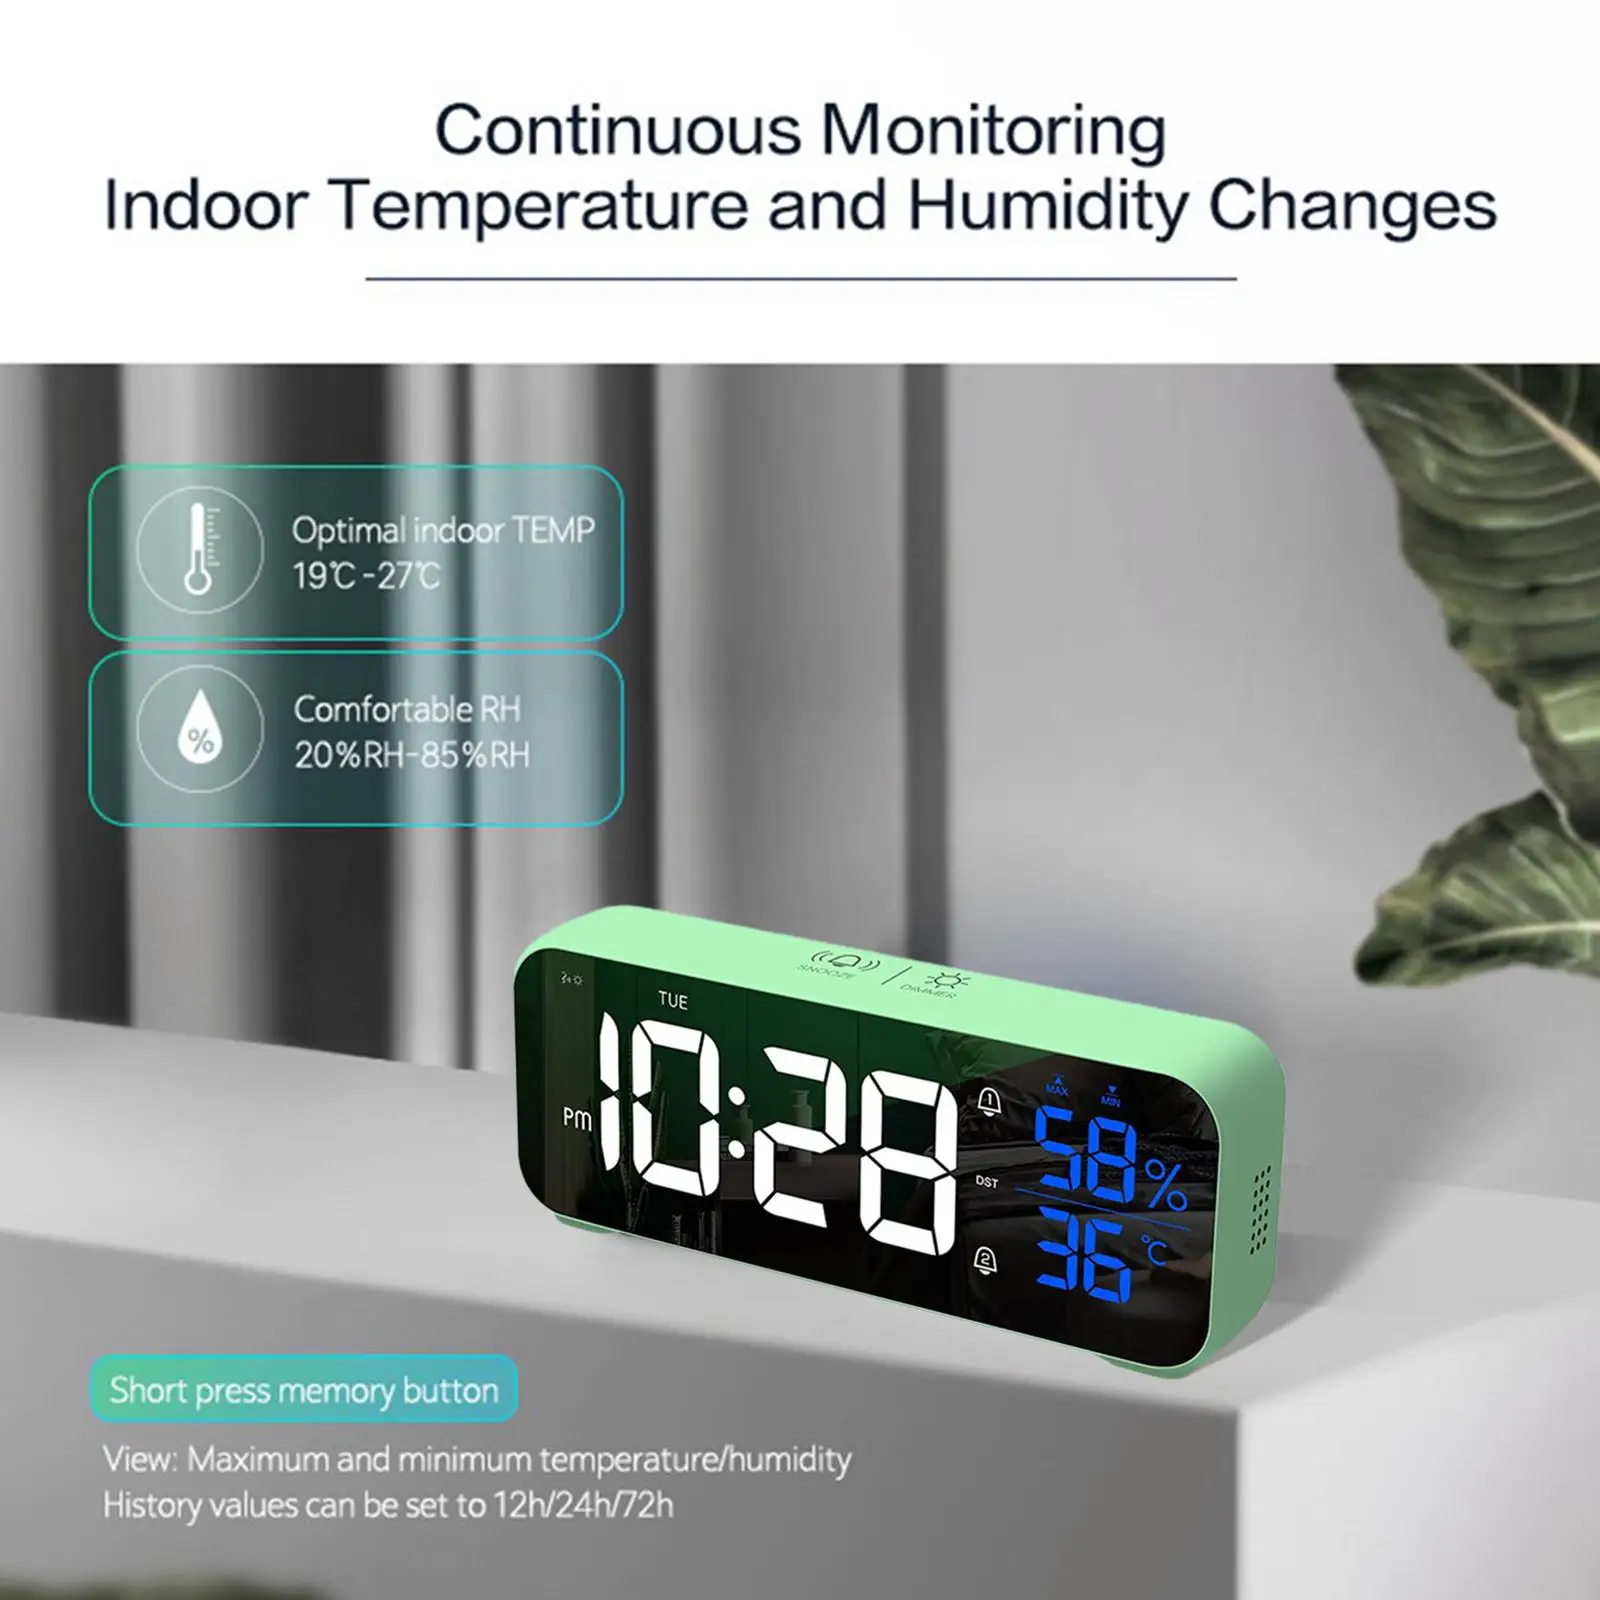 Music LED Digital Alarm Clock USB Charging Port Temperature Humidity Date Display 2 Alarm Setting Tabletop Clocks for Bedroom